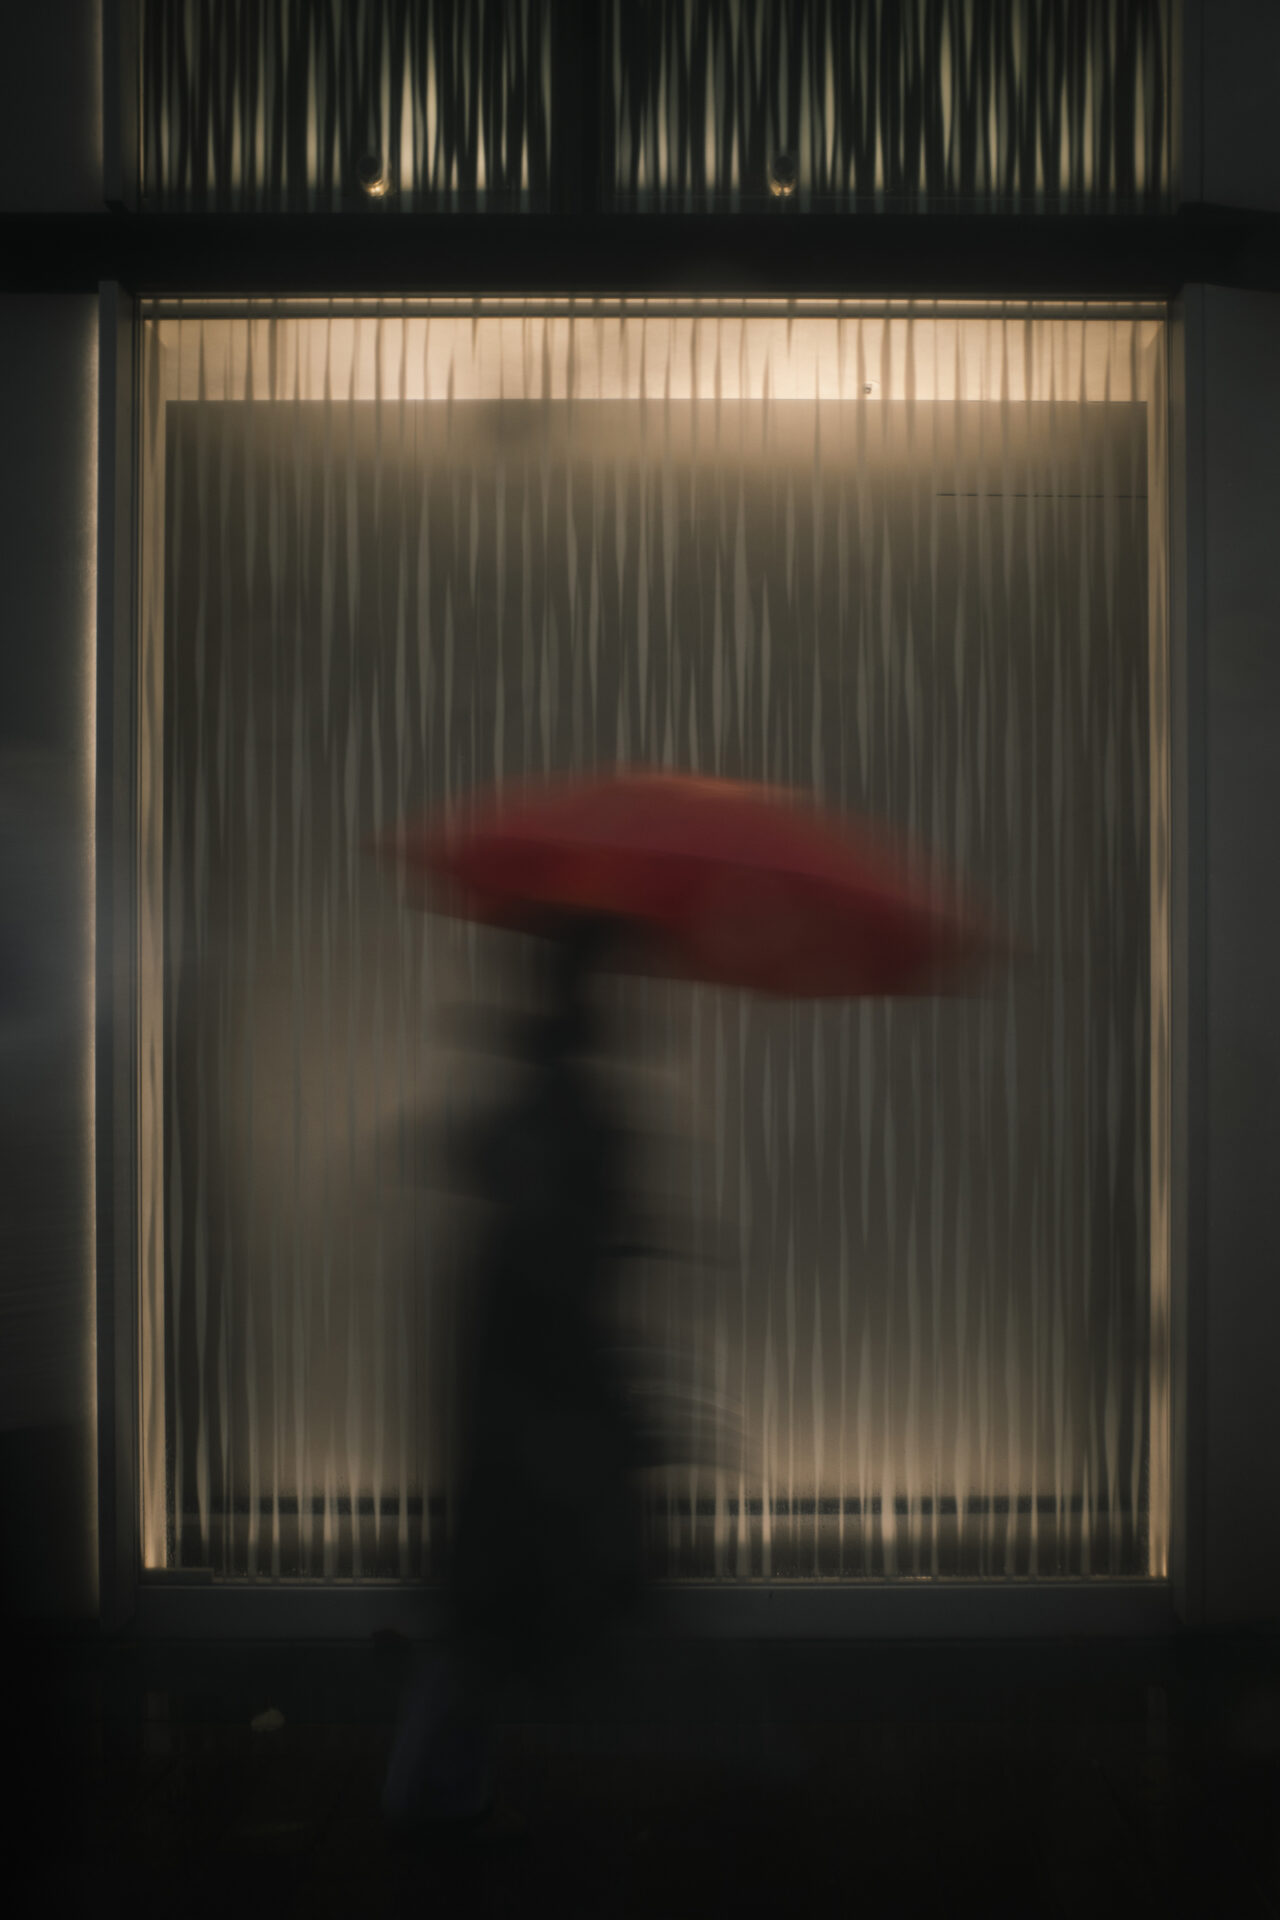 RICOH GR III Diary Editionで撮影したブレている赤い傘をさす人